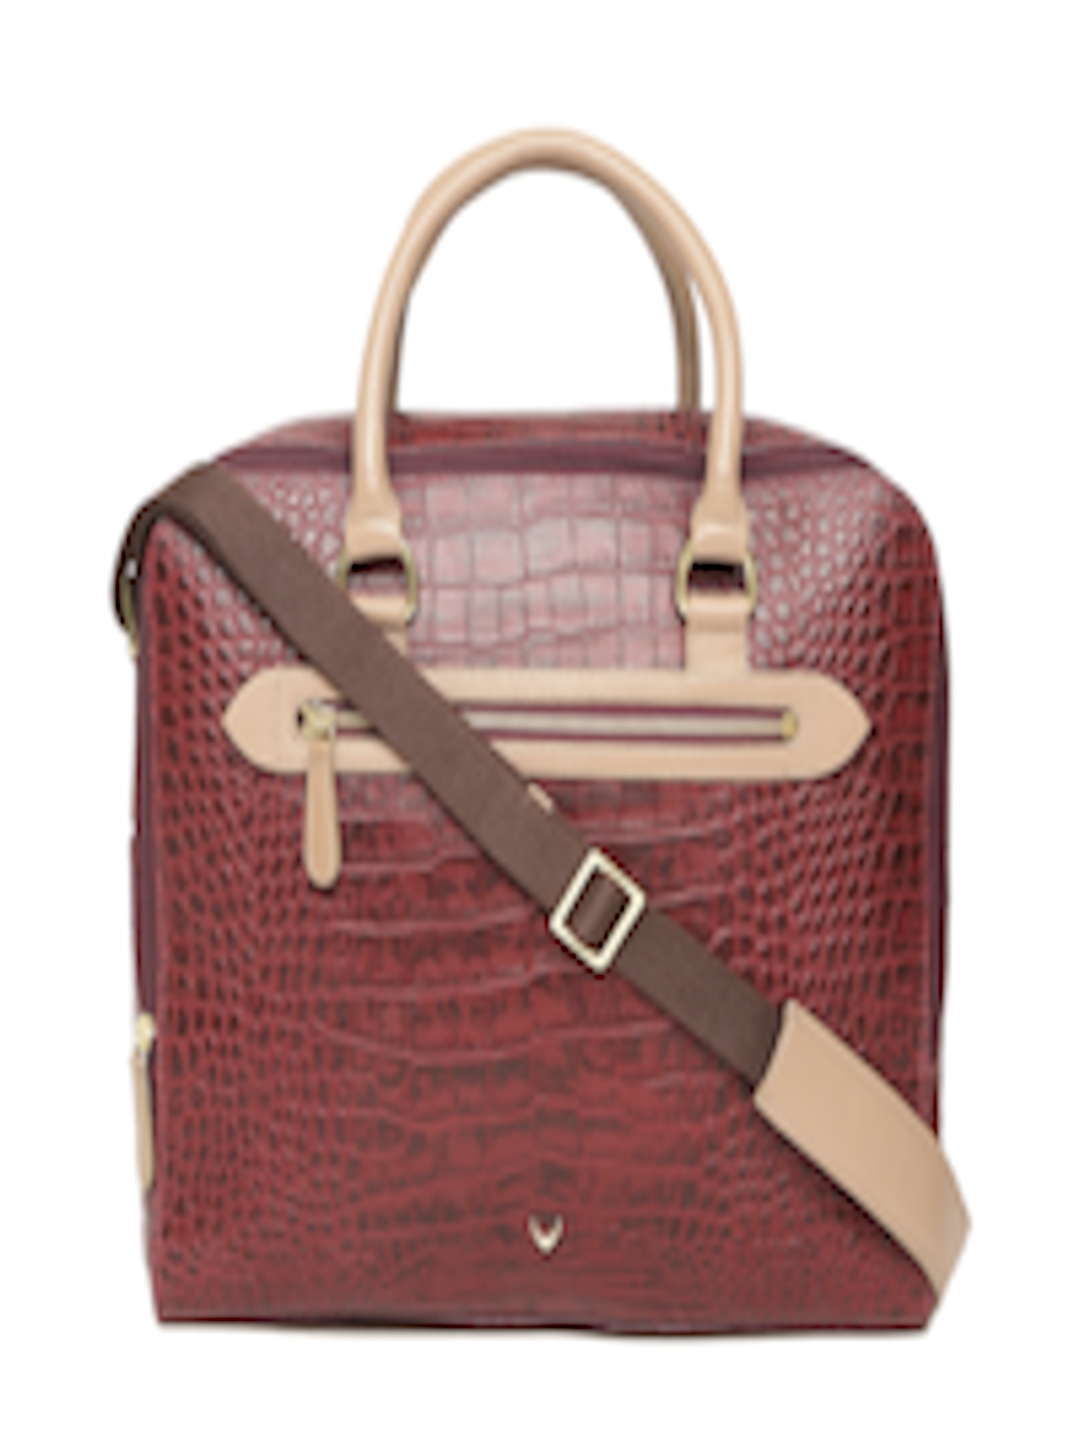 Hidesign 8 Ltrs Brown Laptop Bag (BOWFELL 02) : Amazon.in: Fashion